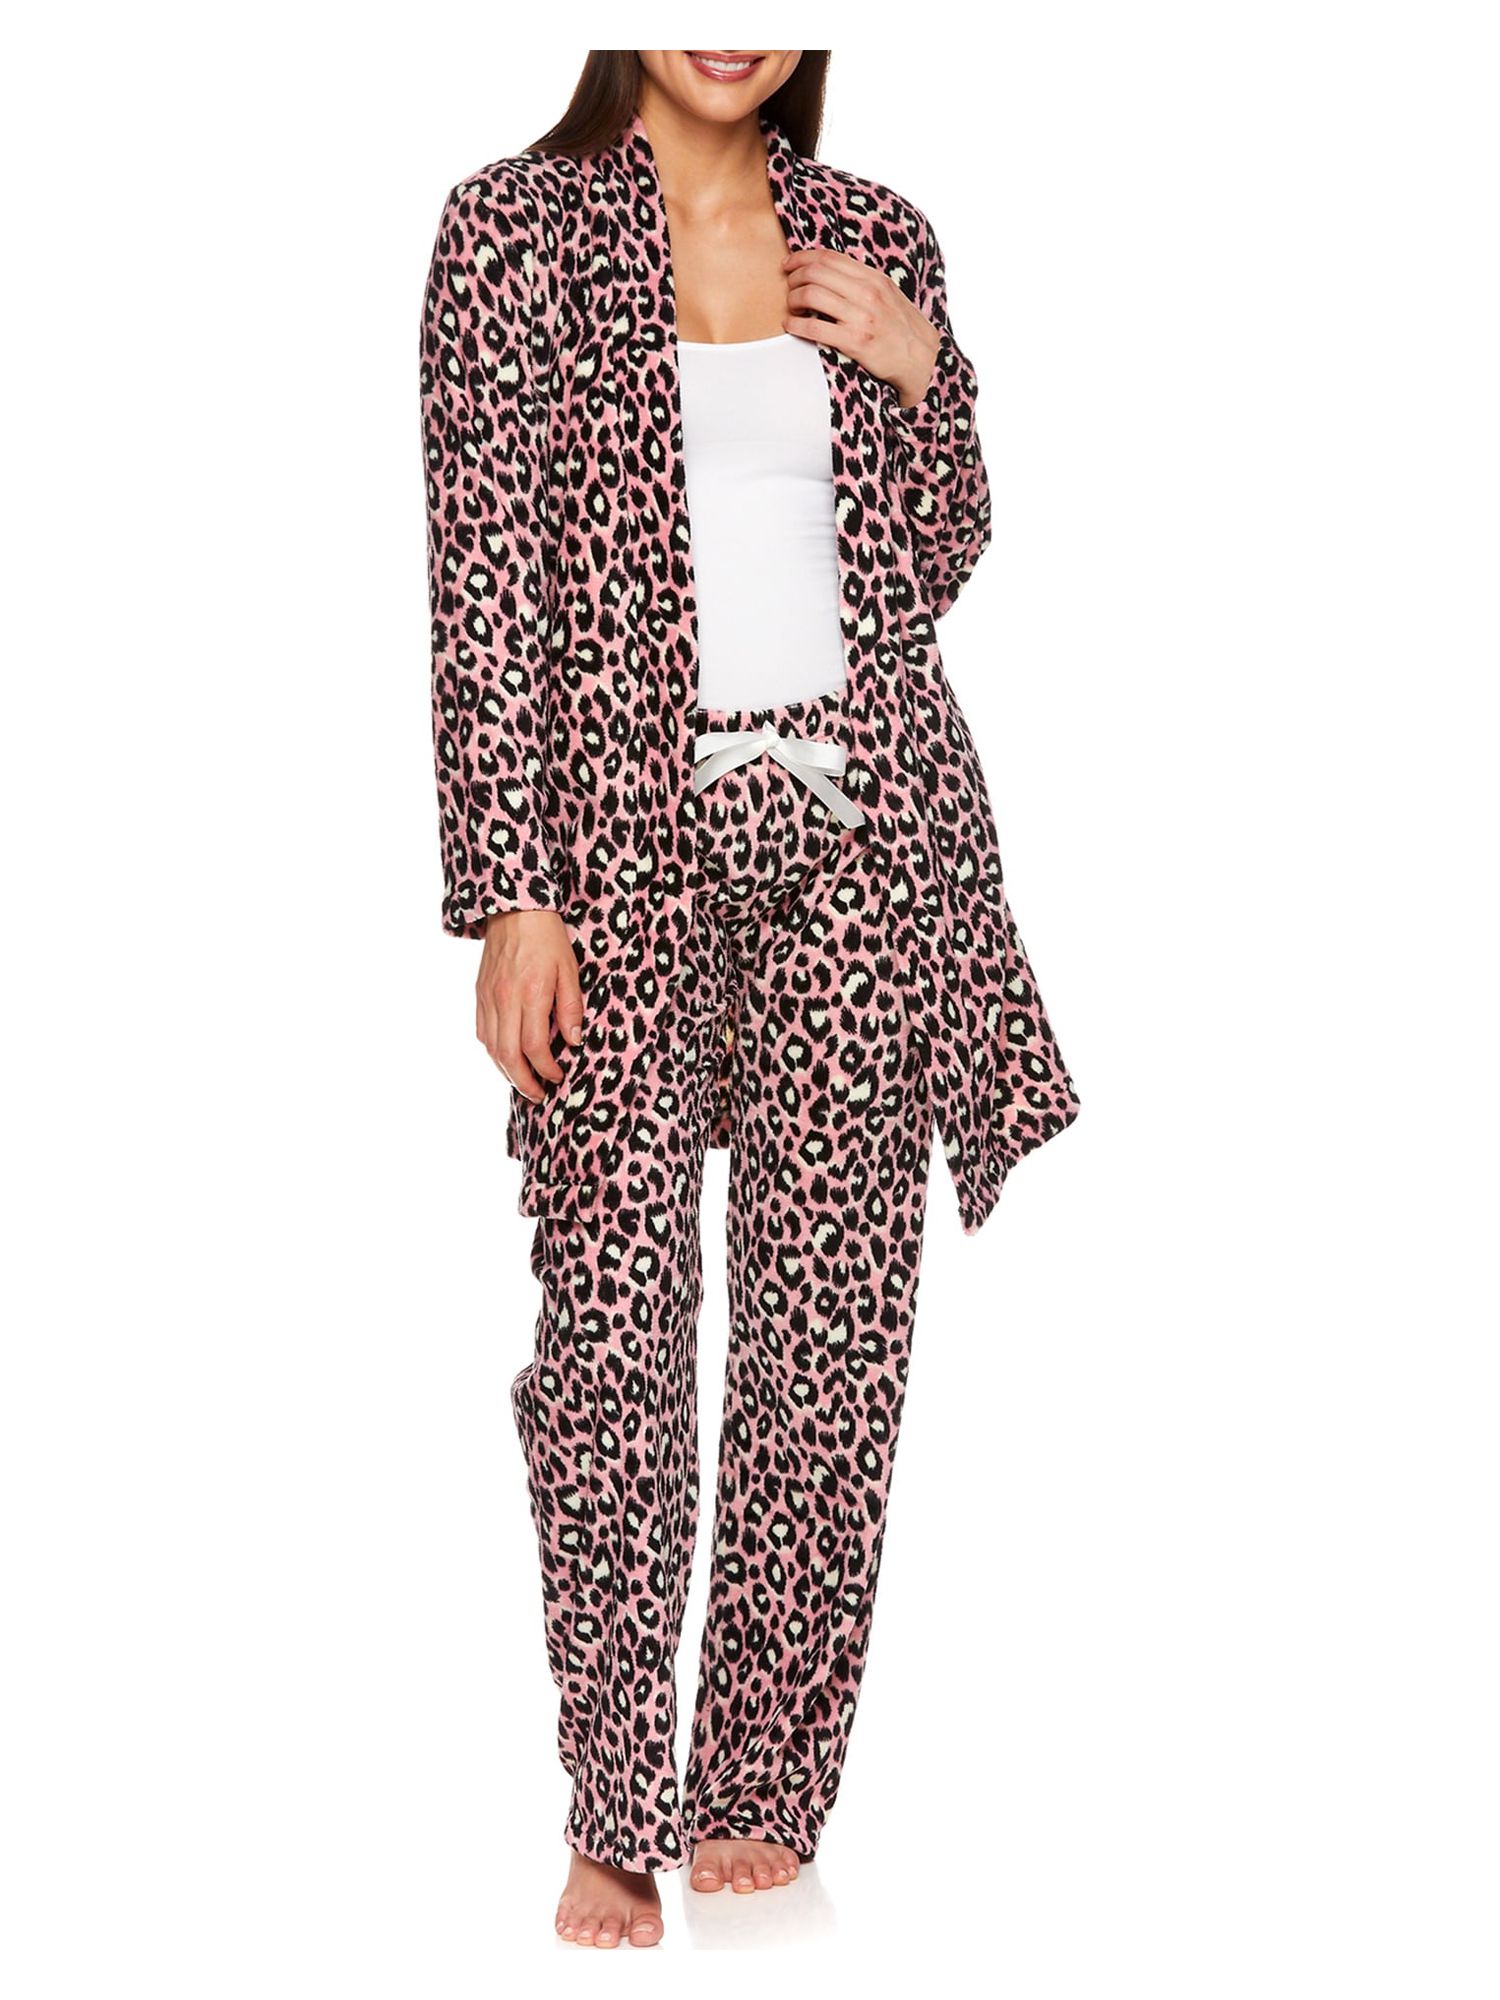 Sleep & Co. Women's & Women's Plus Plush Robe and Pajama Pant 2pc Set - image 2 of 6